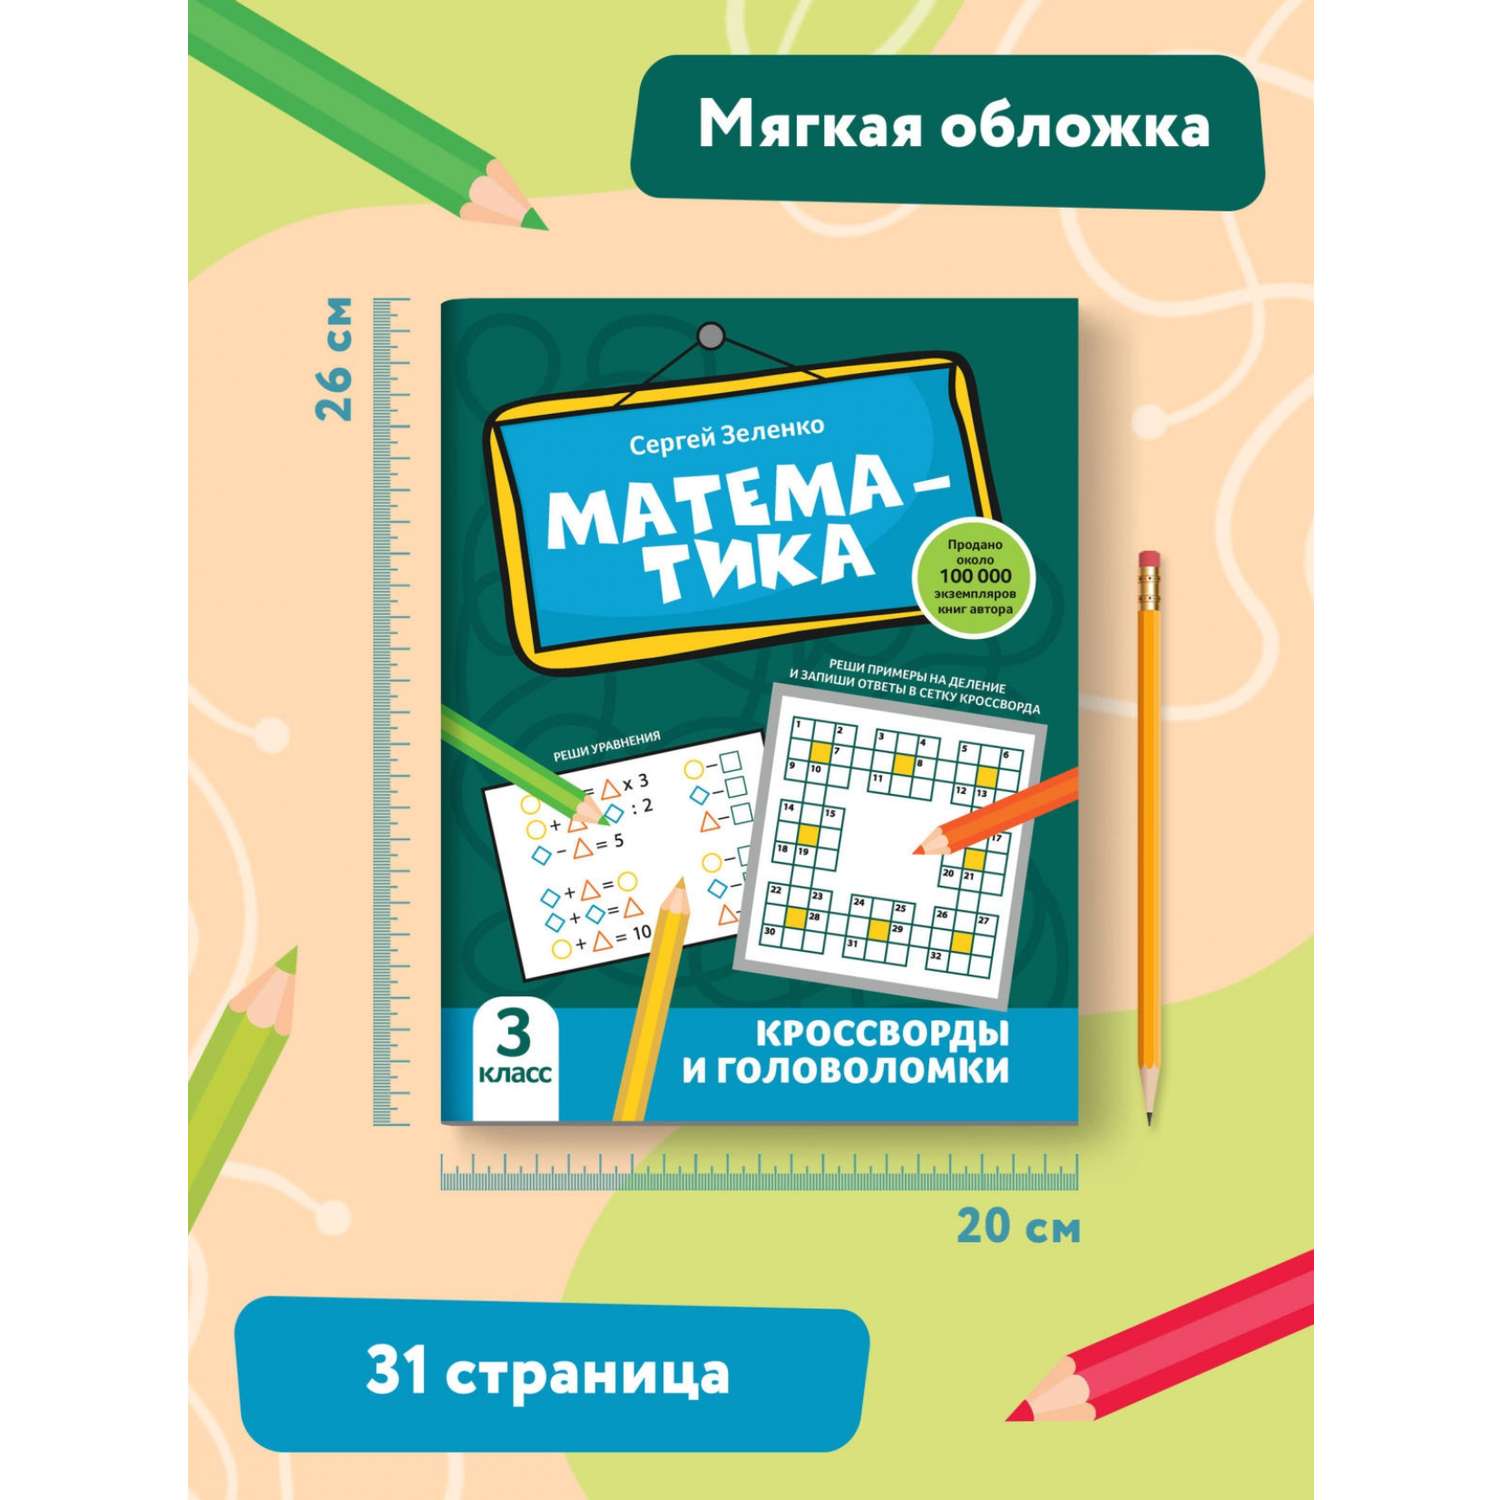 Книга Феникс Математика: кроссворды и головоломки: 3 класс - фото 8